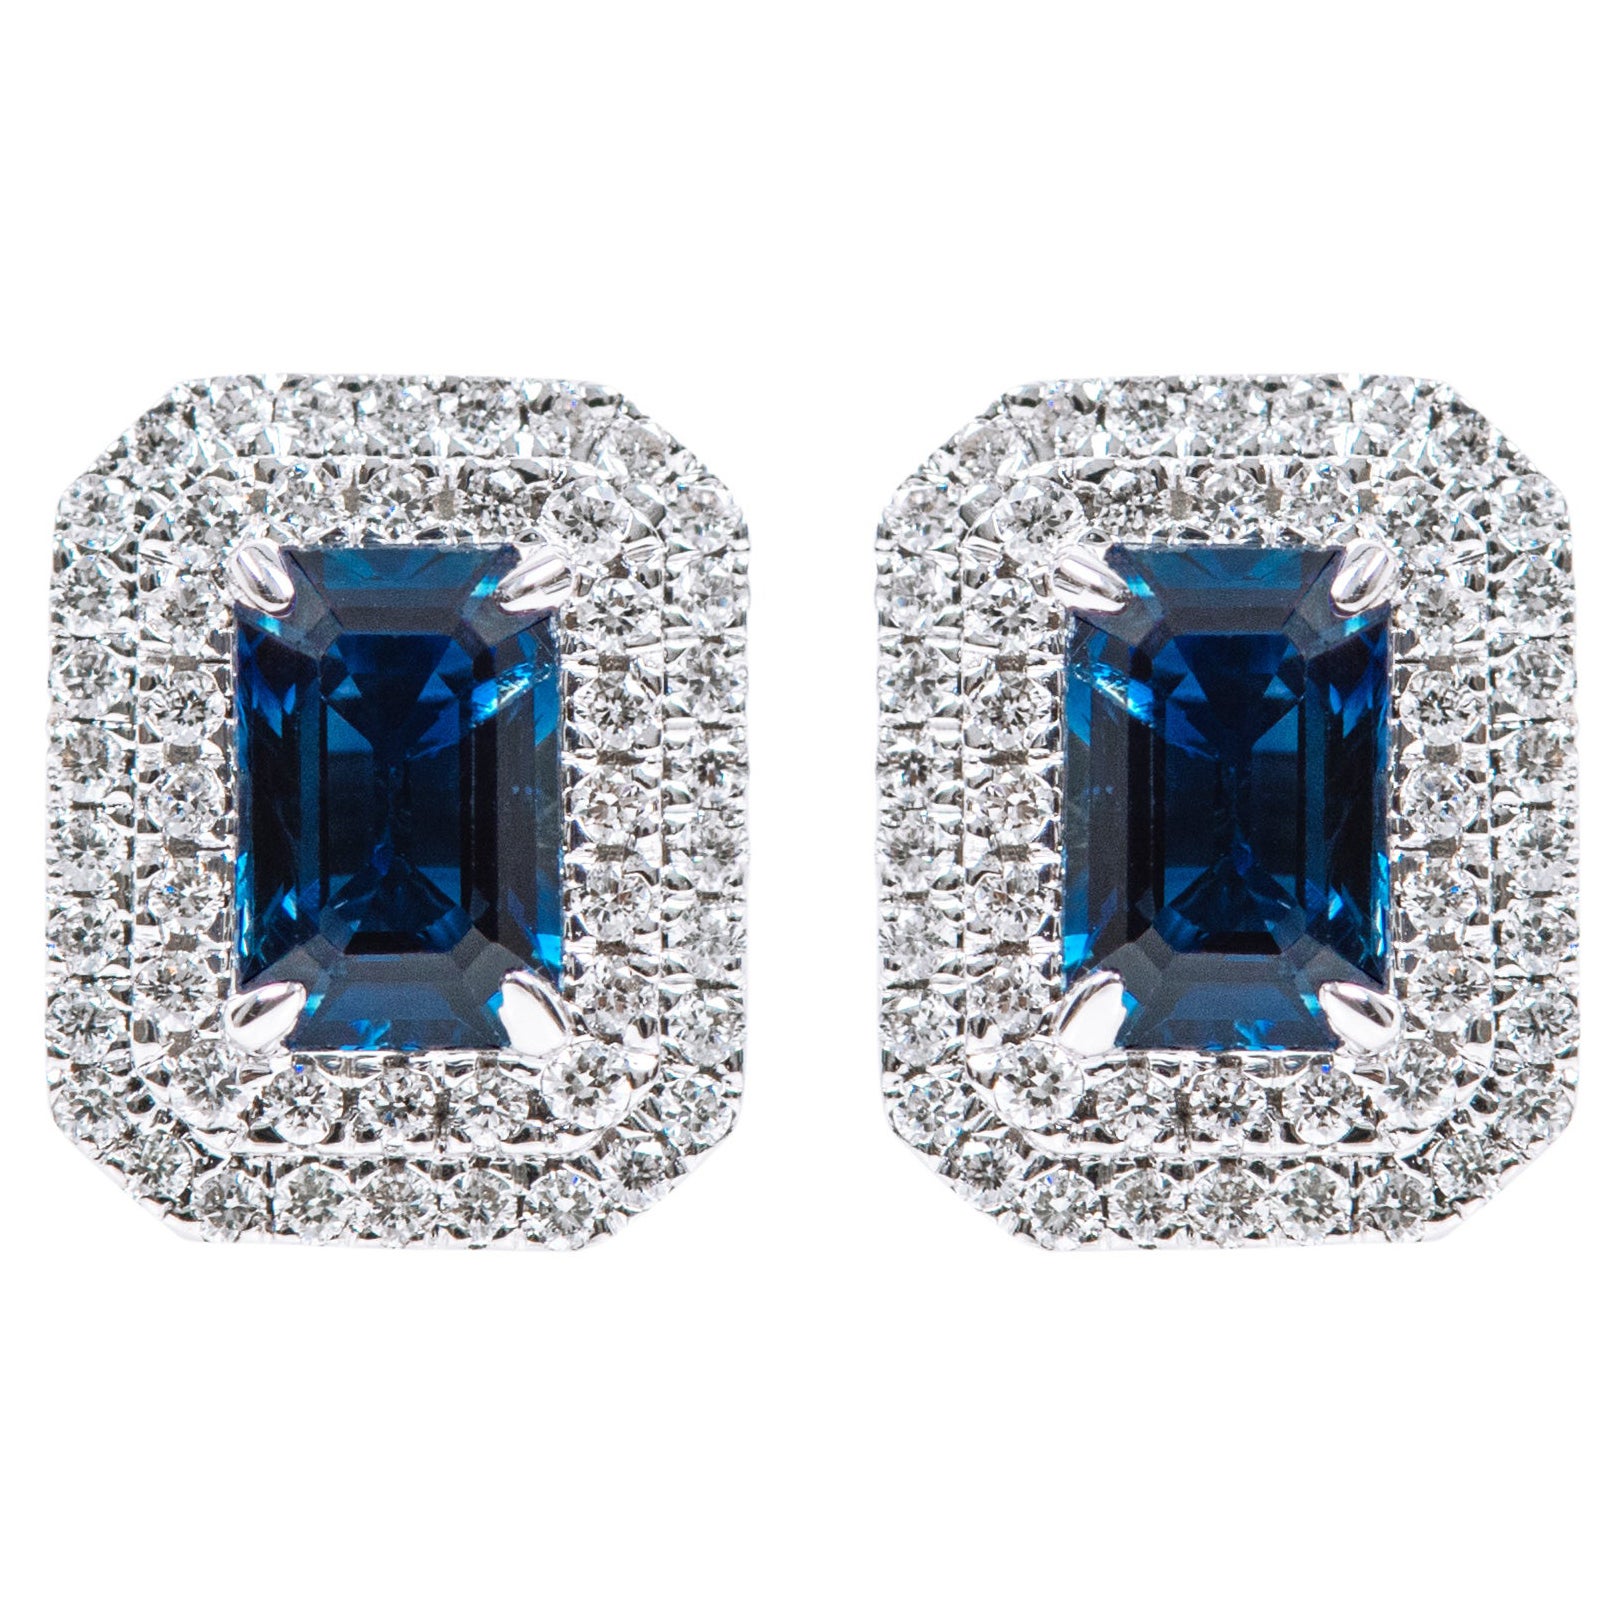 18 Karat Gold 1.41 Carat Sapphire and Diamond Double Cluster Stud Earrings